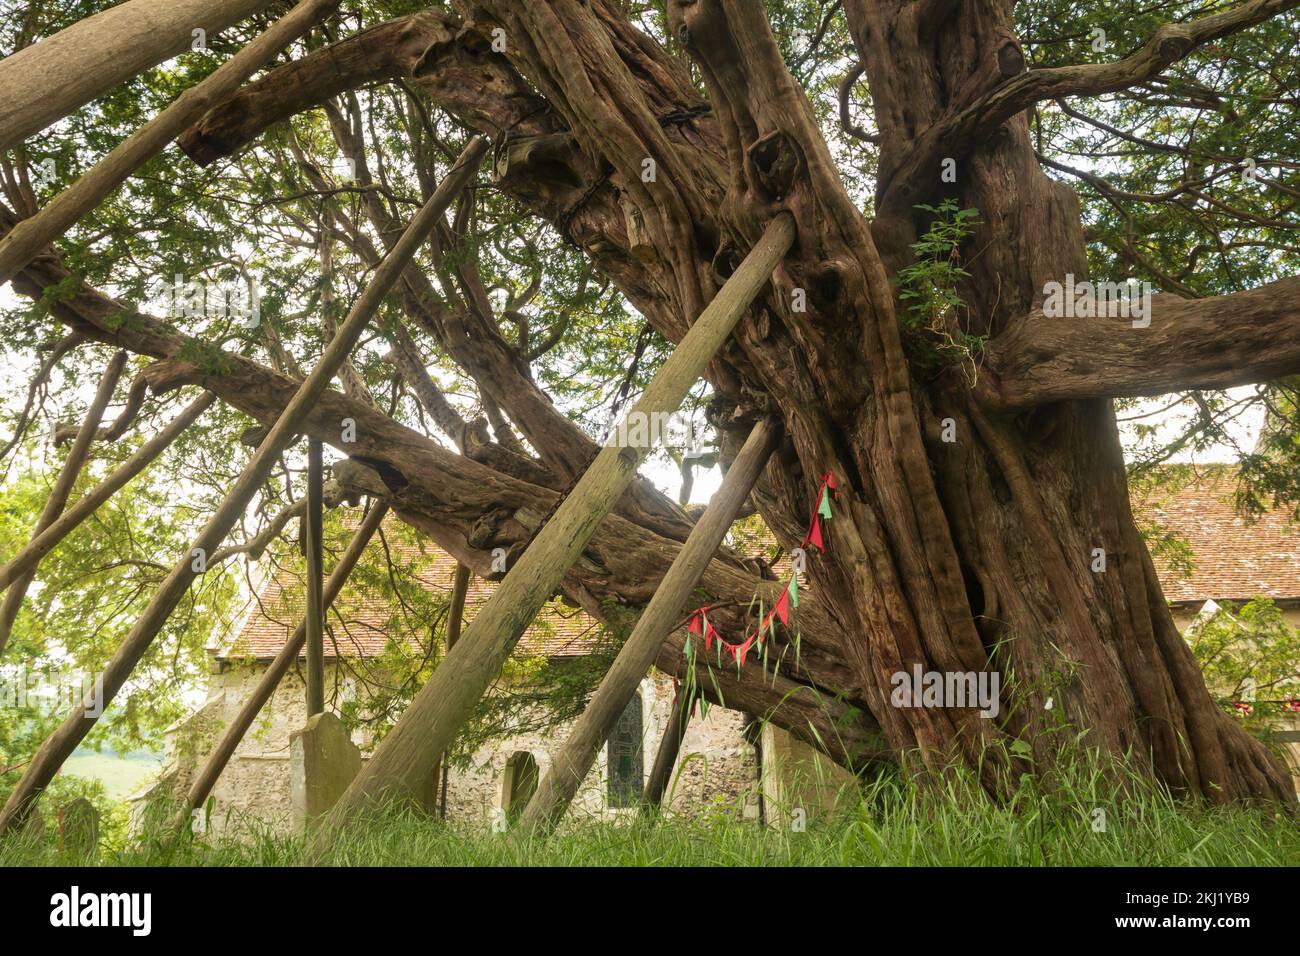 The Wilmington Yew. East Sussex, UK. Stock Photo